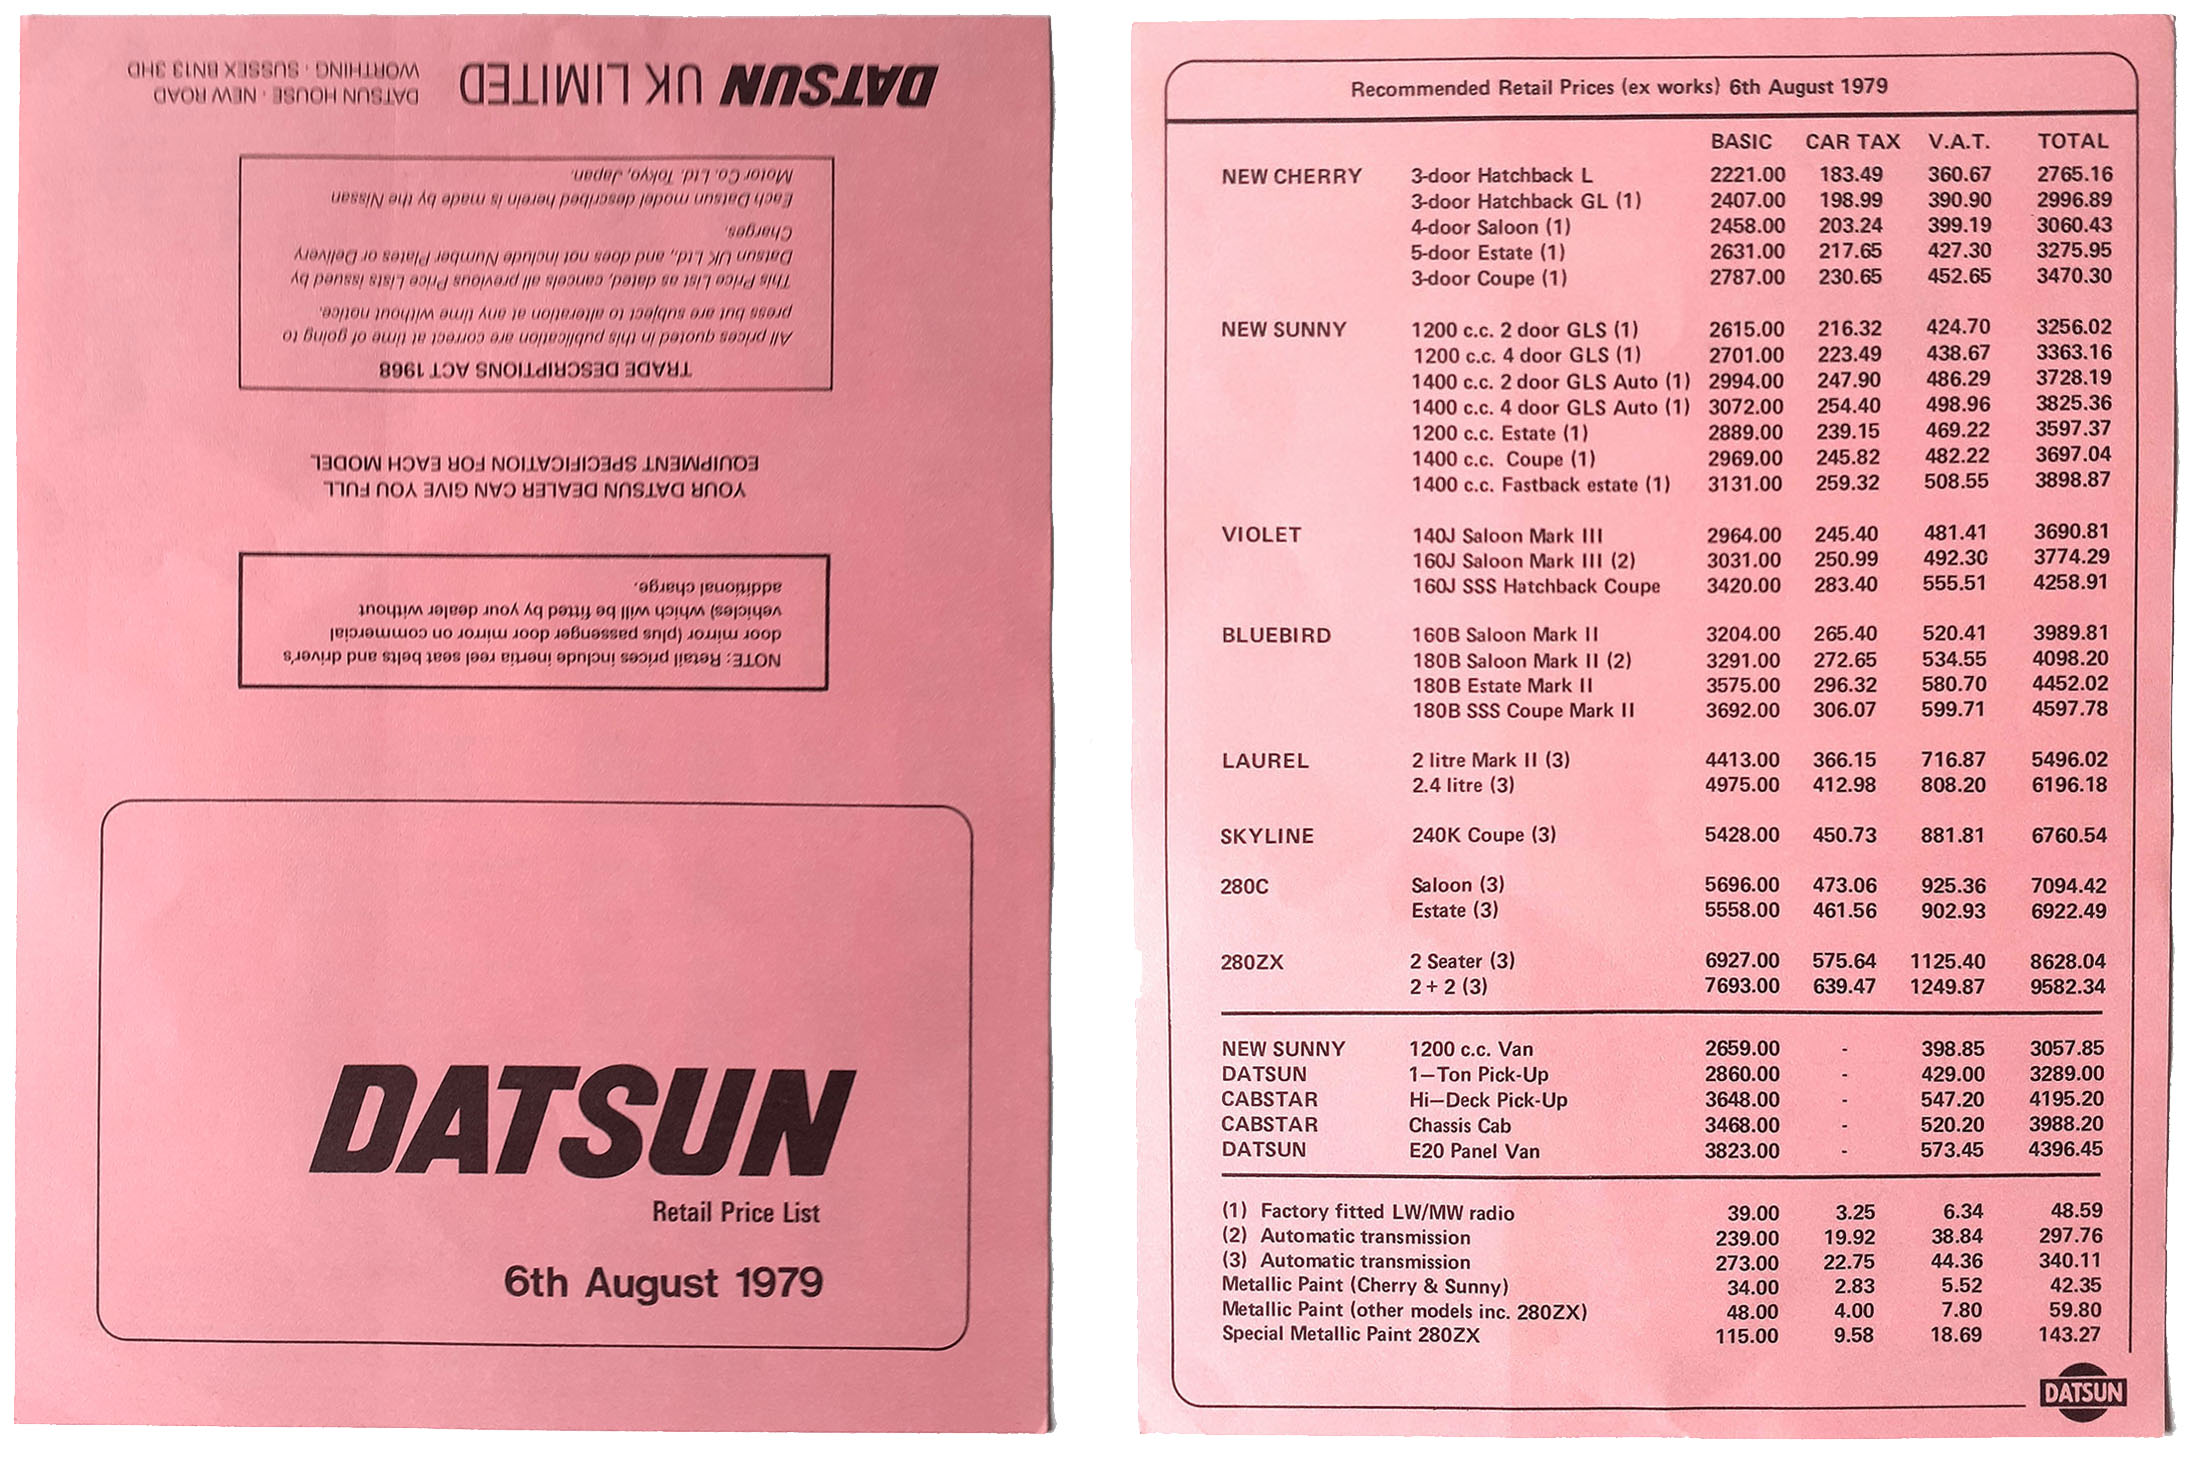 datsun_uk_price_list_1979.jpg